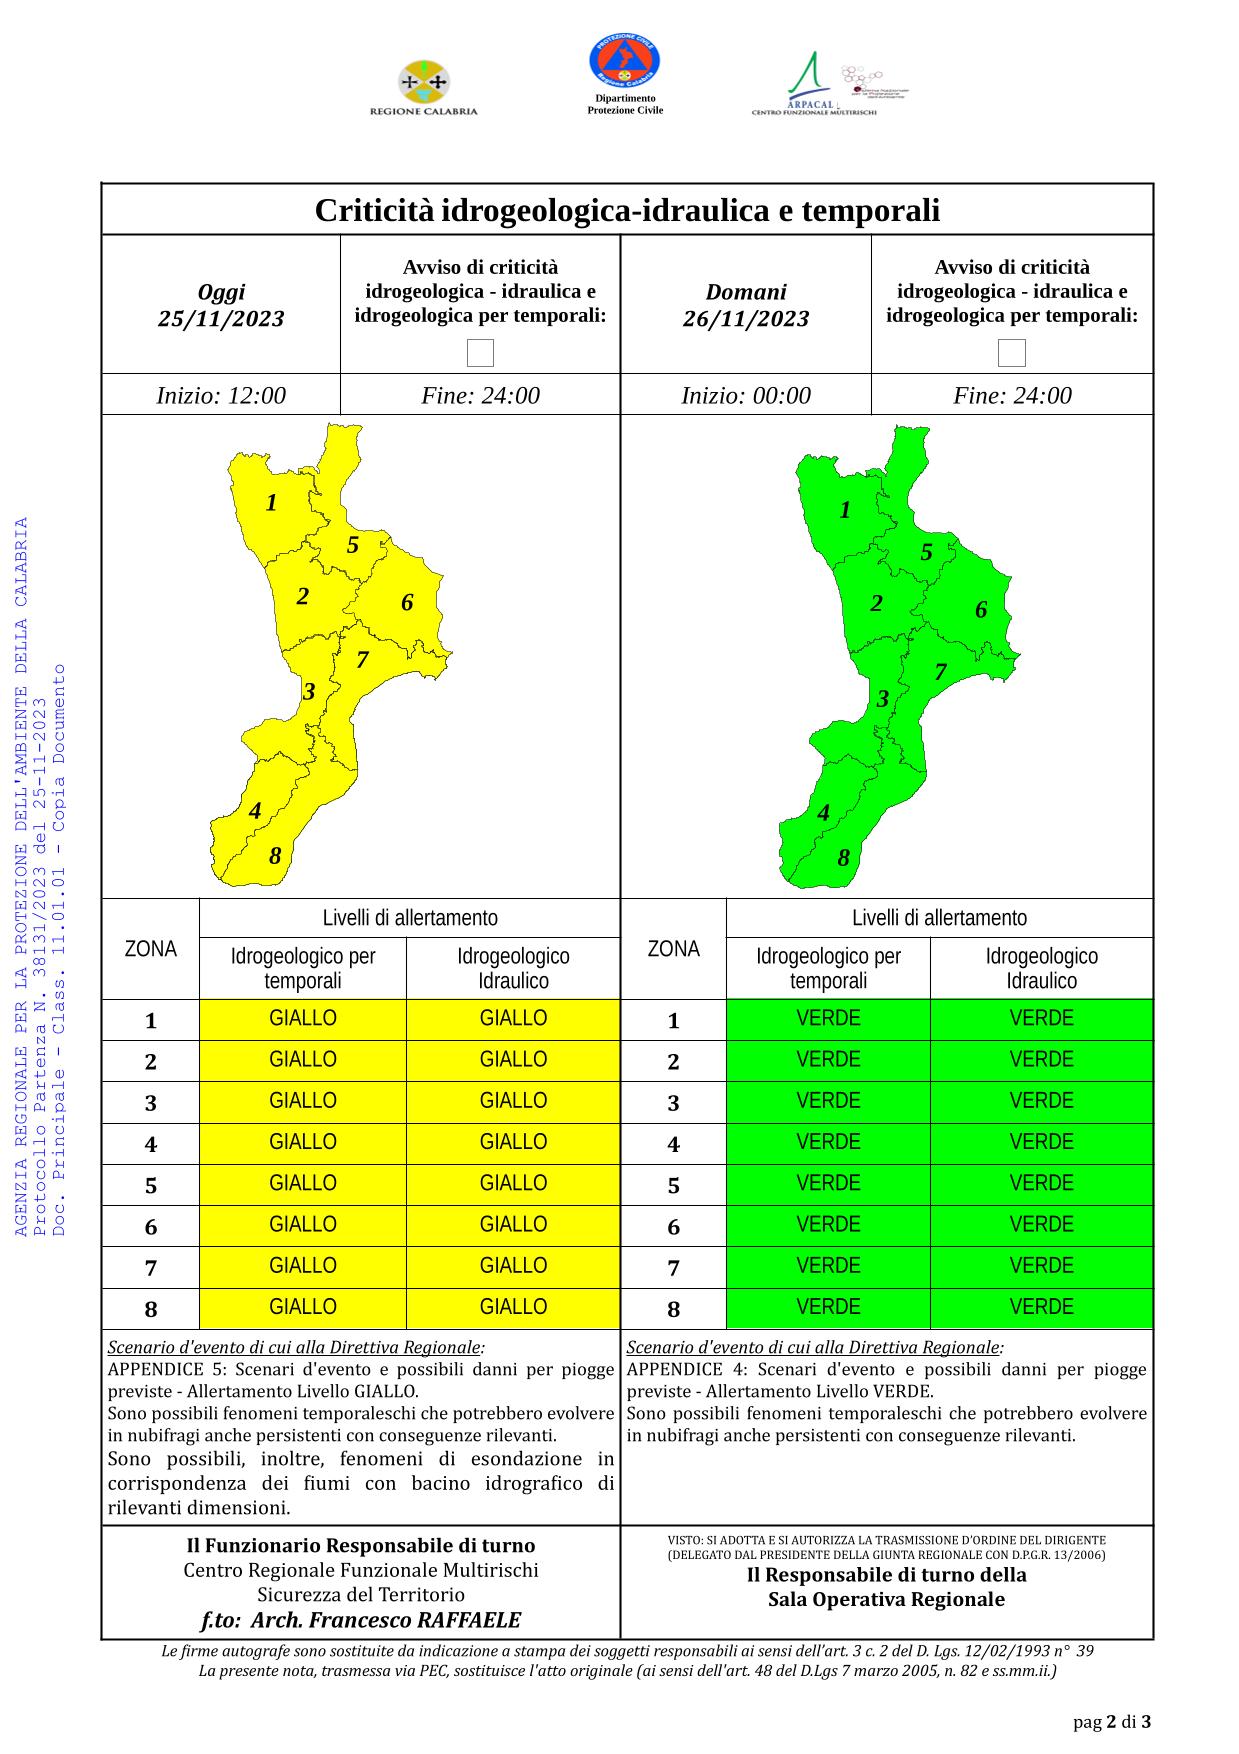 Criticità idrogeologica-idraulica e temporali in Calabria 25-11-2023